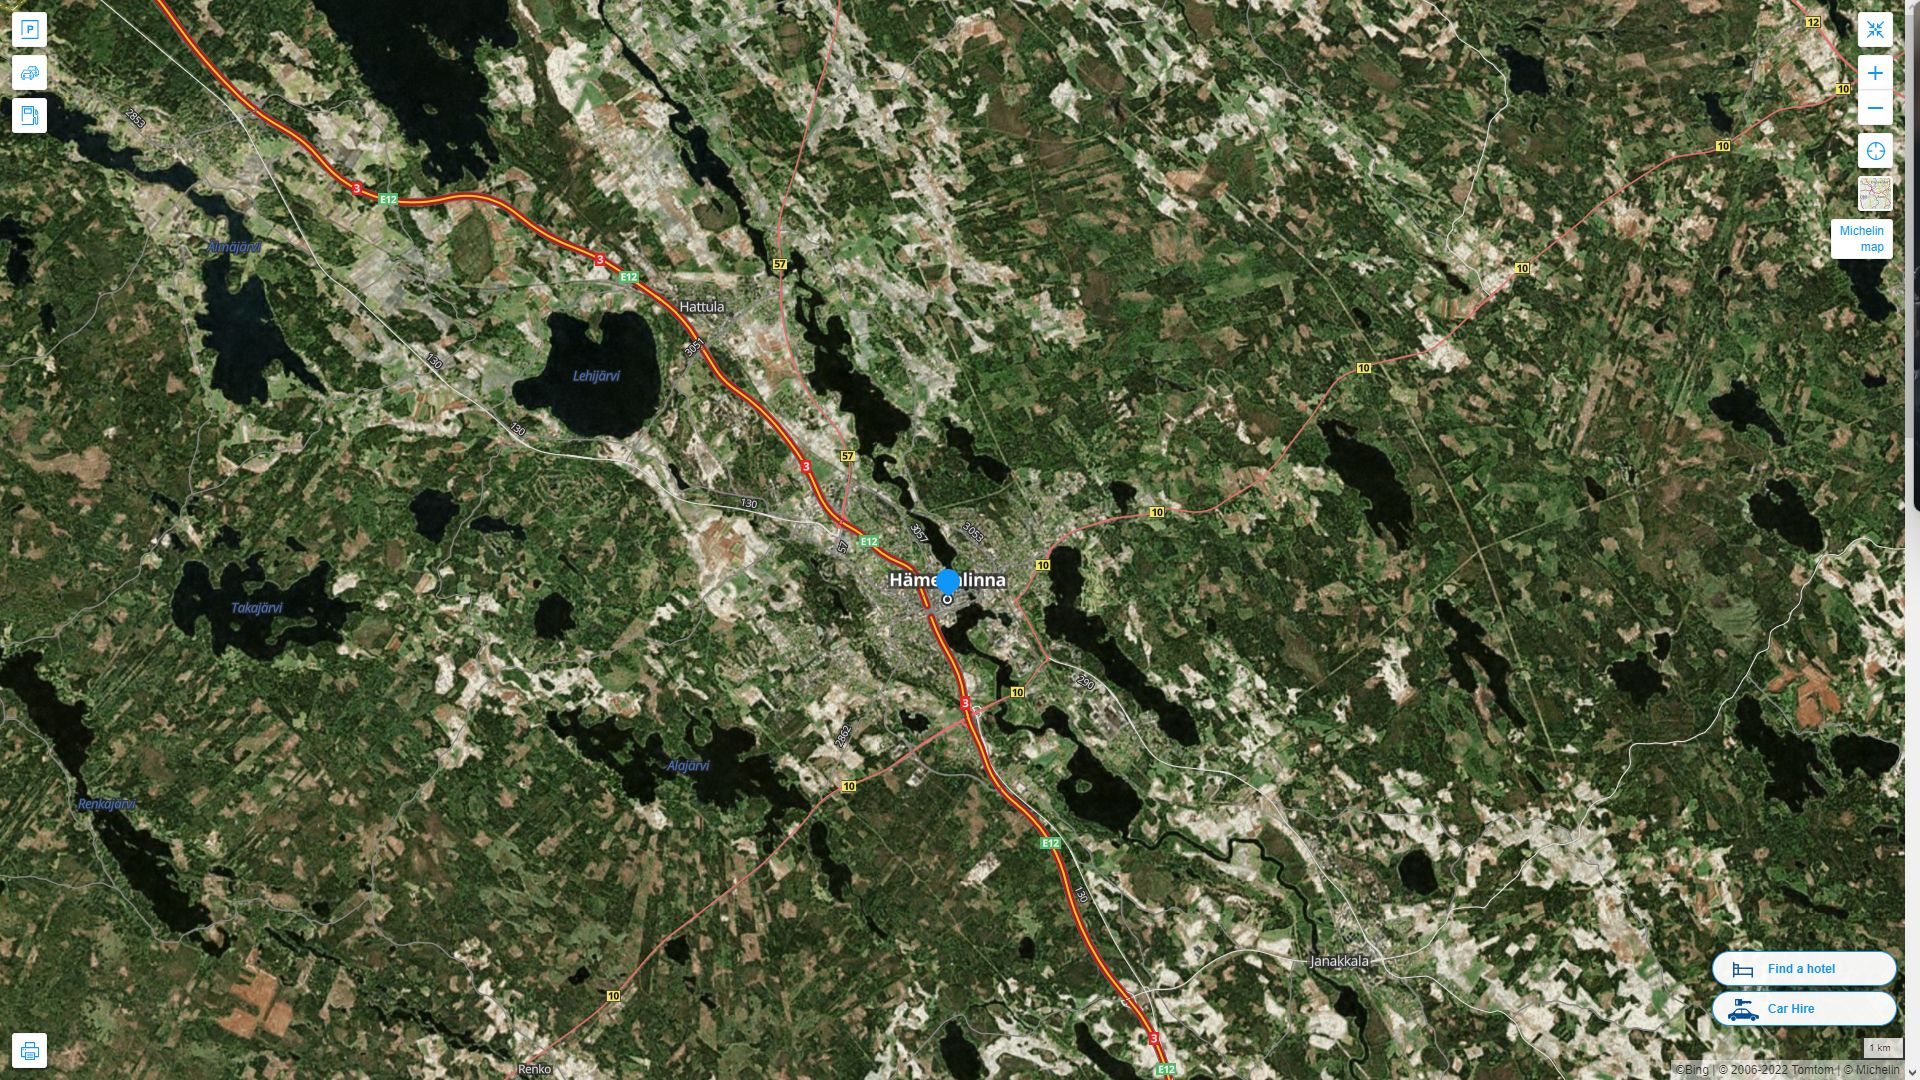 Hameenlinna Finlande Autoroute et carte routiere avec vue satellite